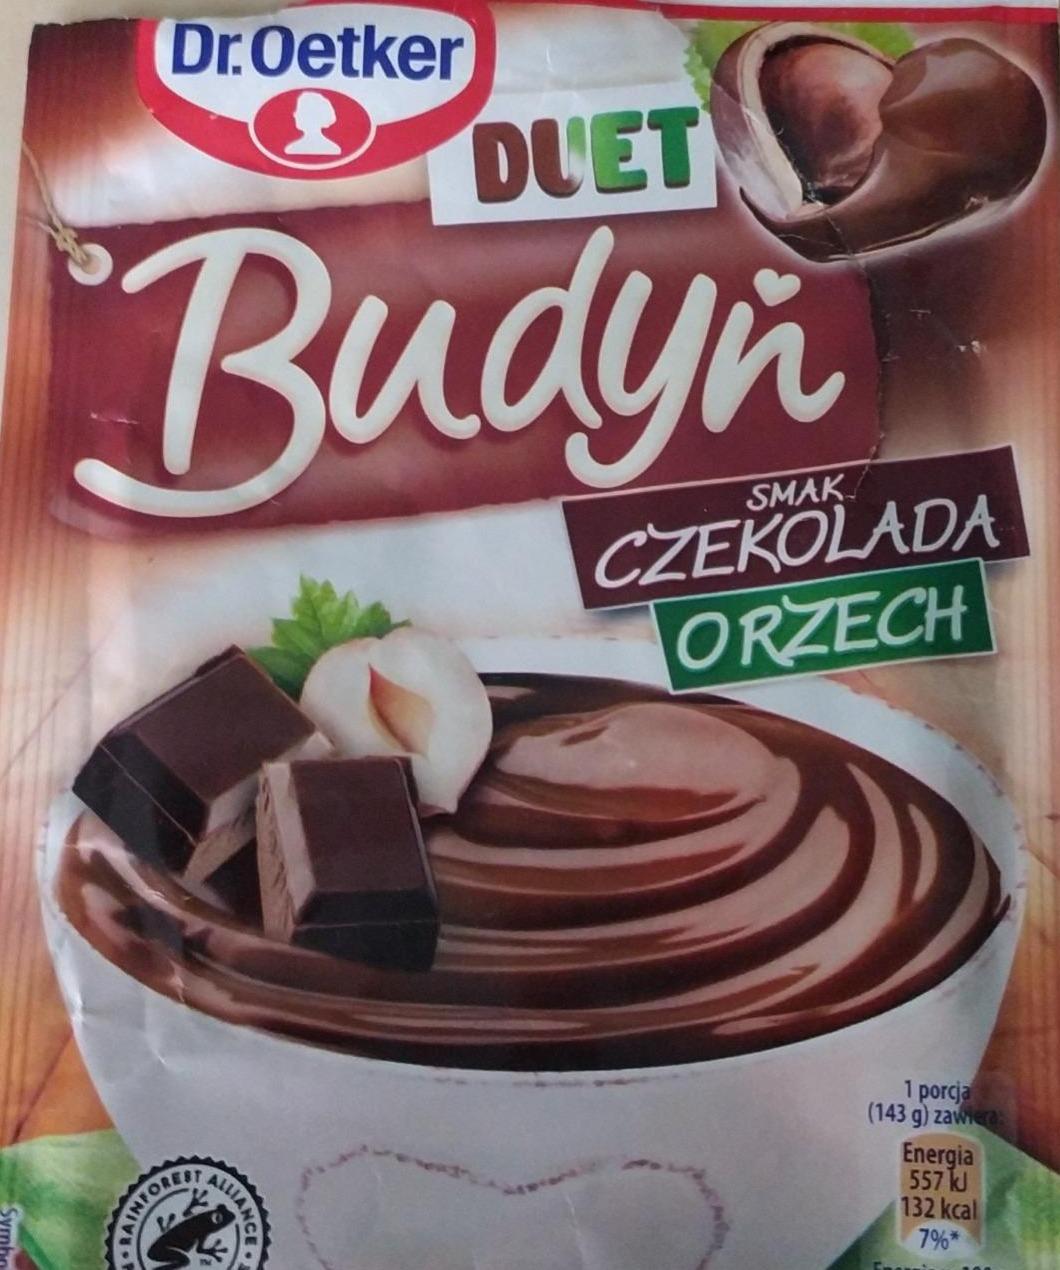 Фото - Duet Budyń smak czekolada orzech Dr.Oetker